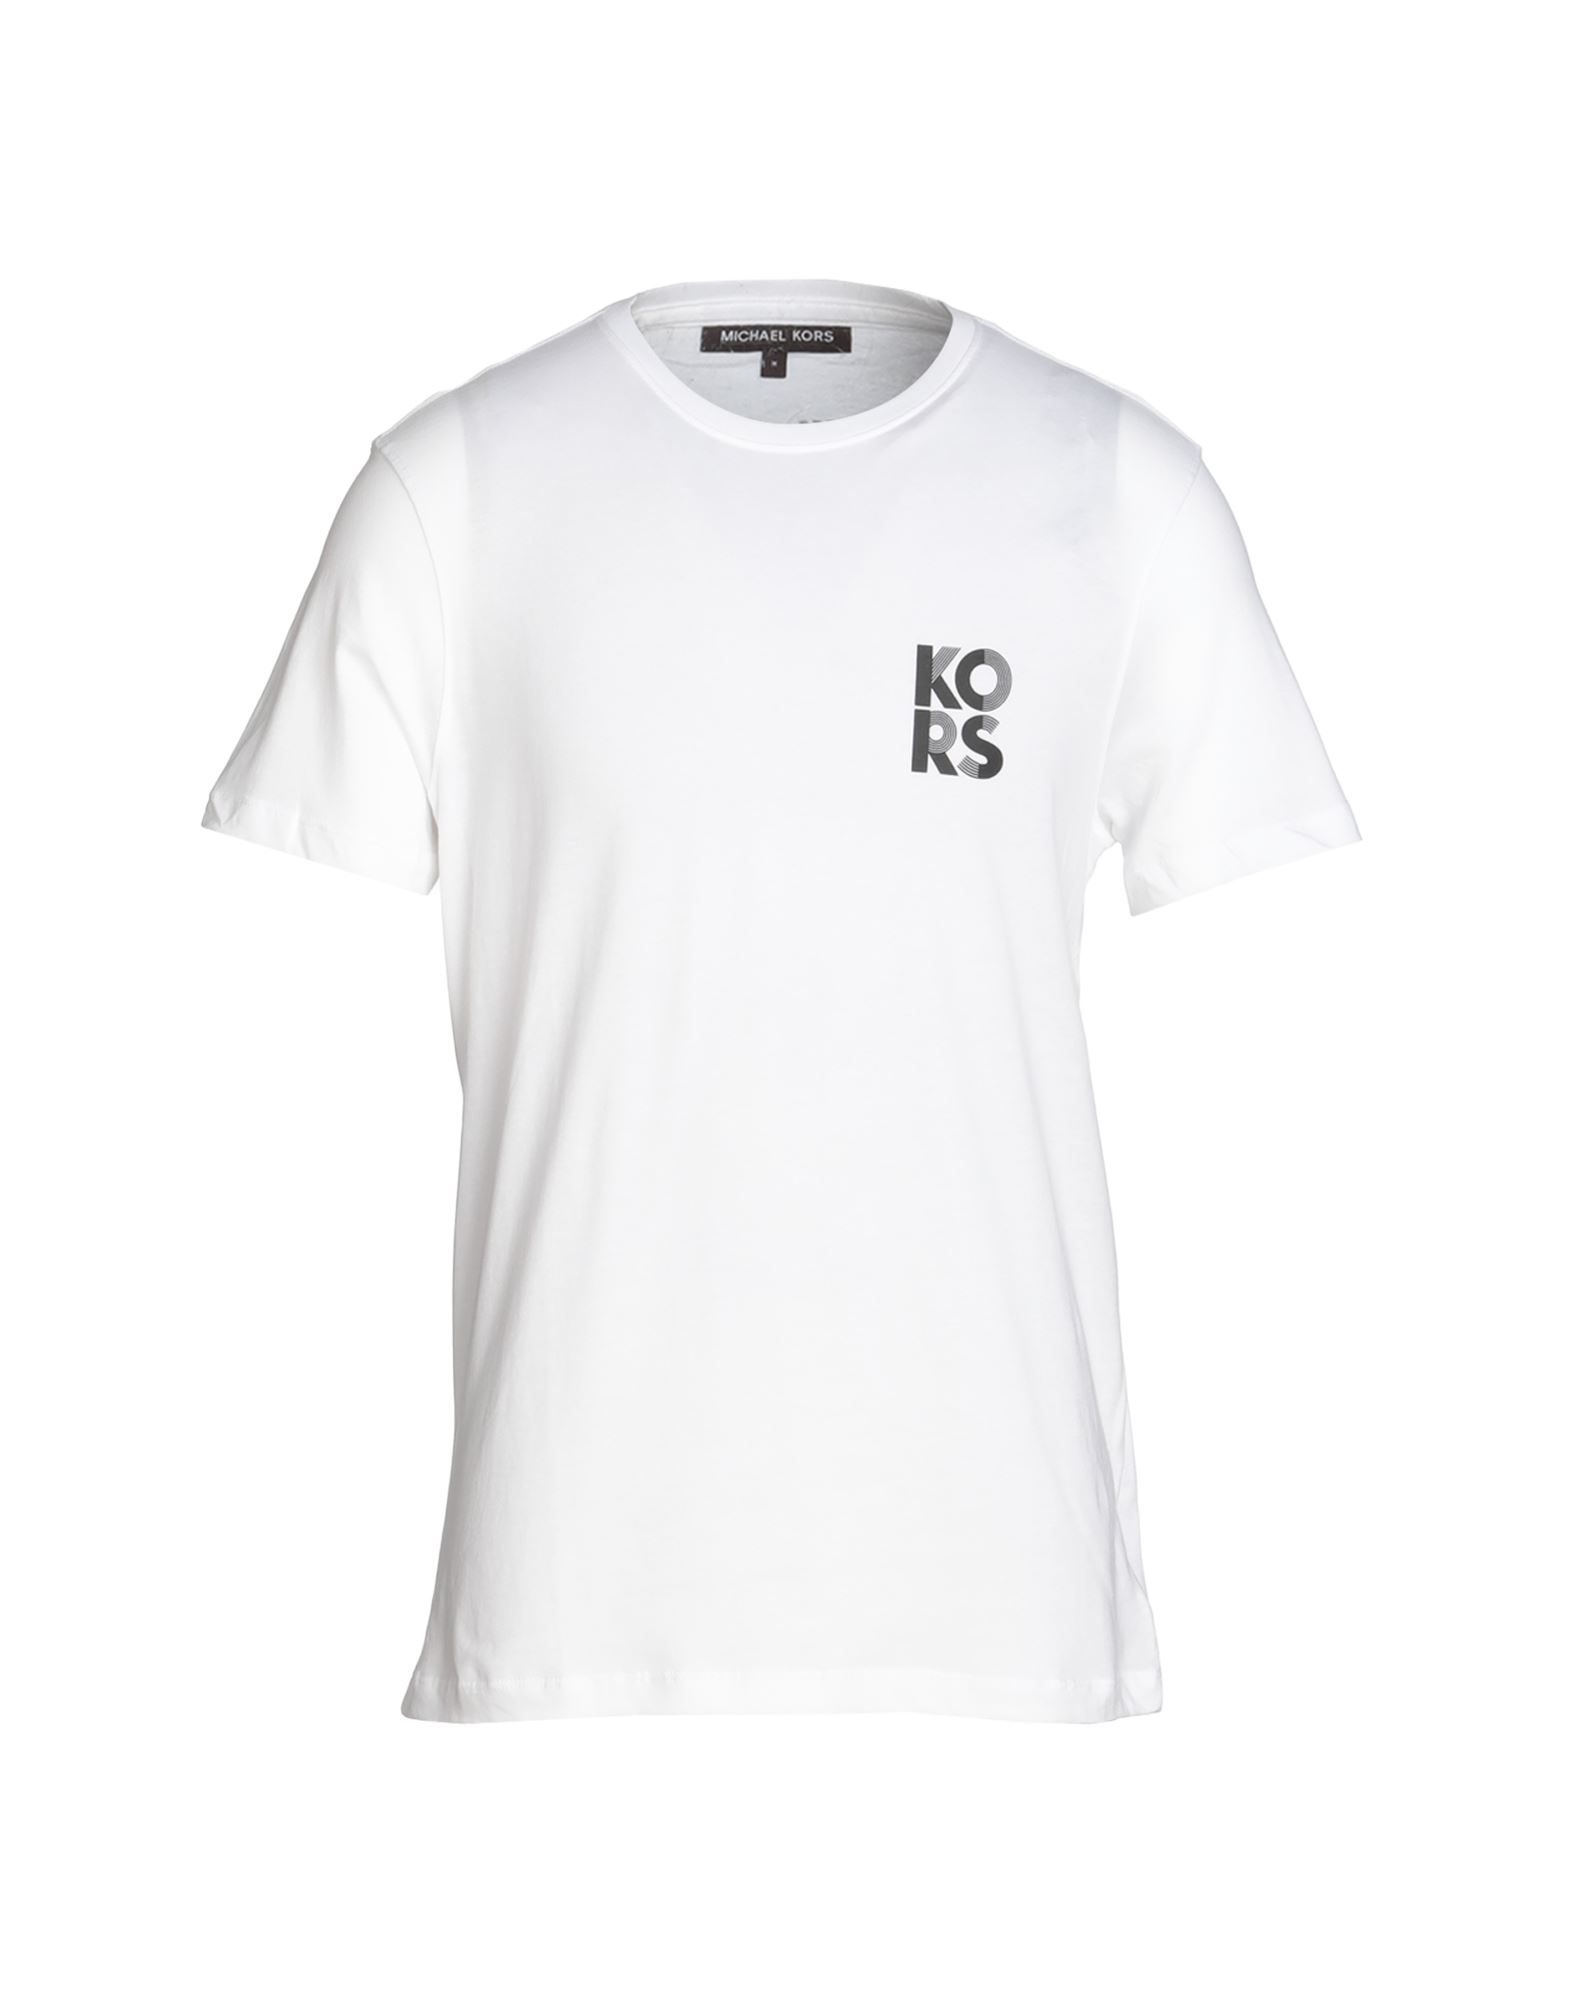 MICHAEL KORS MENS T-shirts Herren Weiß von MICHAEL KORS MENS